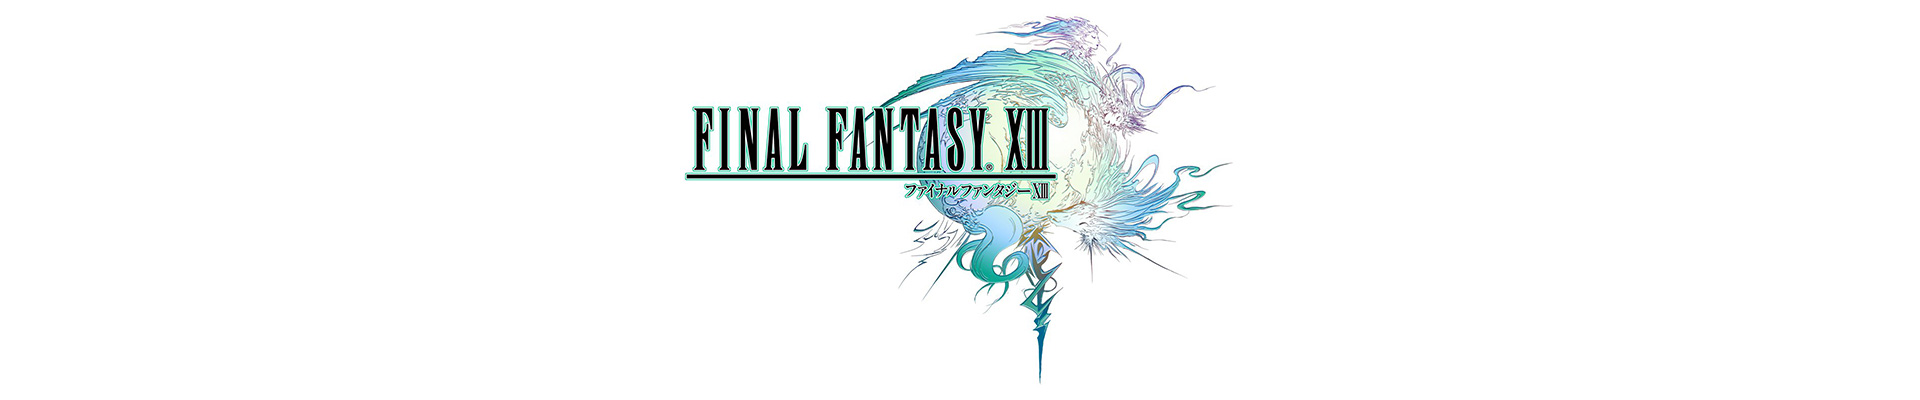 Final Fantasy XIII. Едет Ласи через Фалси